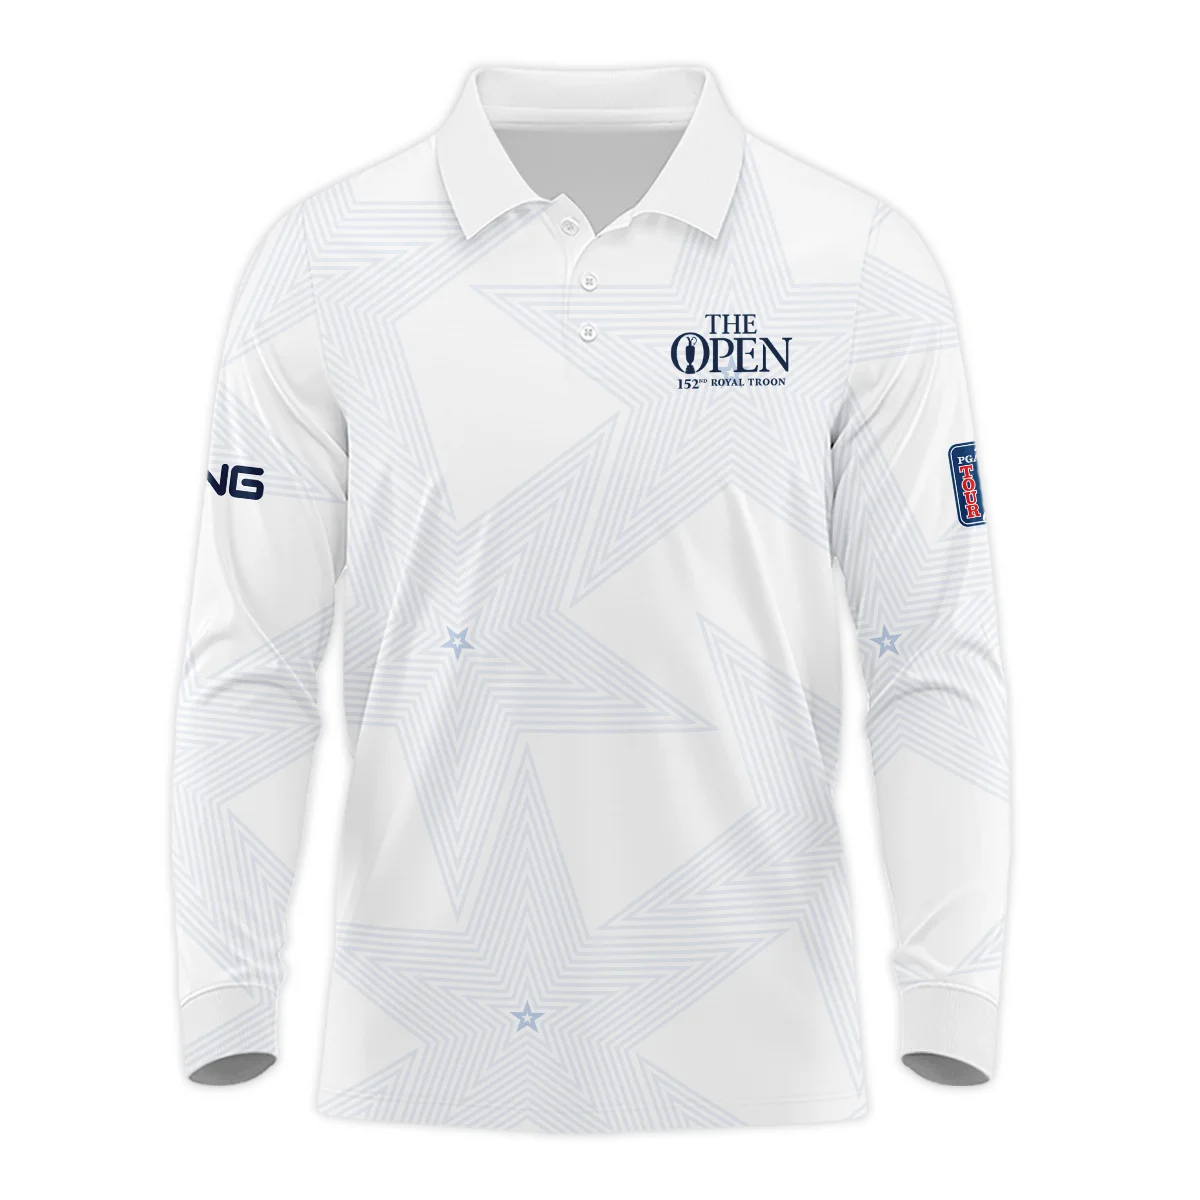 The 152nd Open Championship Golf Sport Ping Quarter-Zip Jacket Sports Star Sripe White Navy Quarter-Zip Jacket